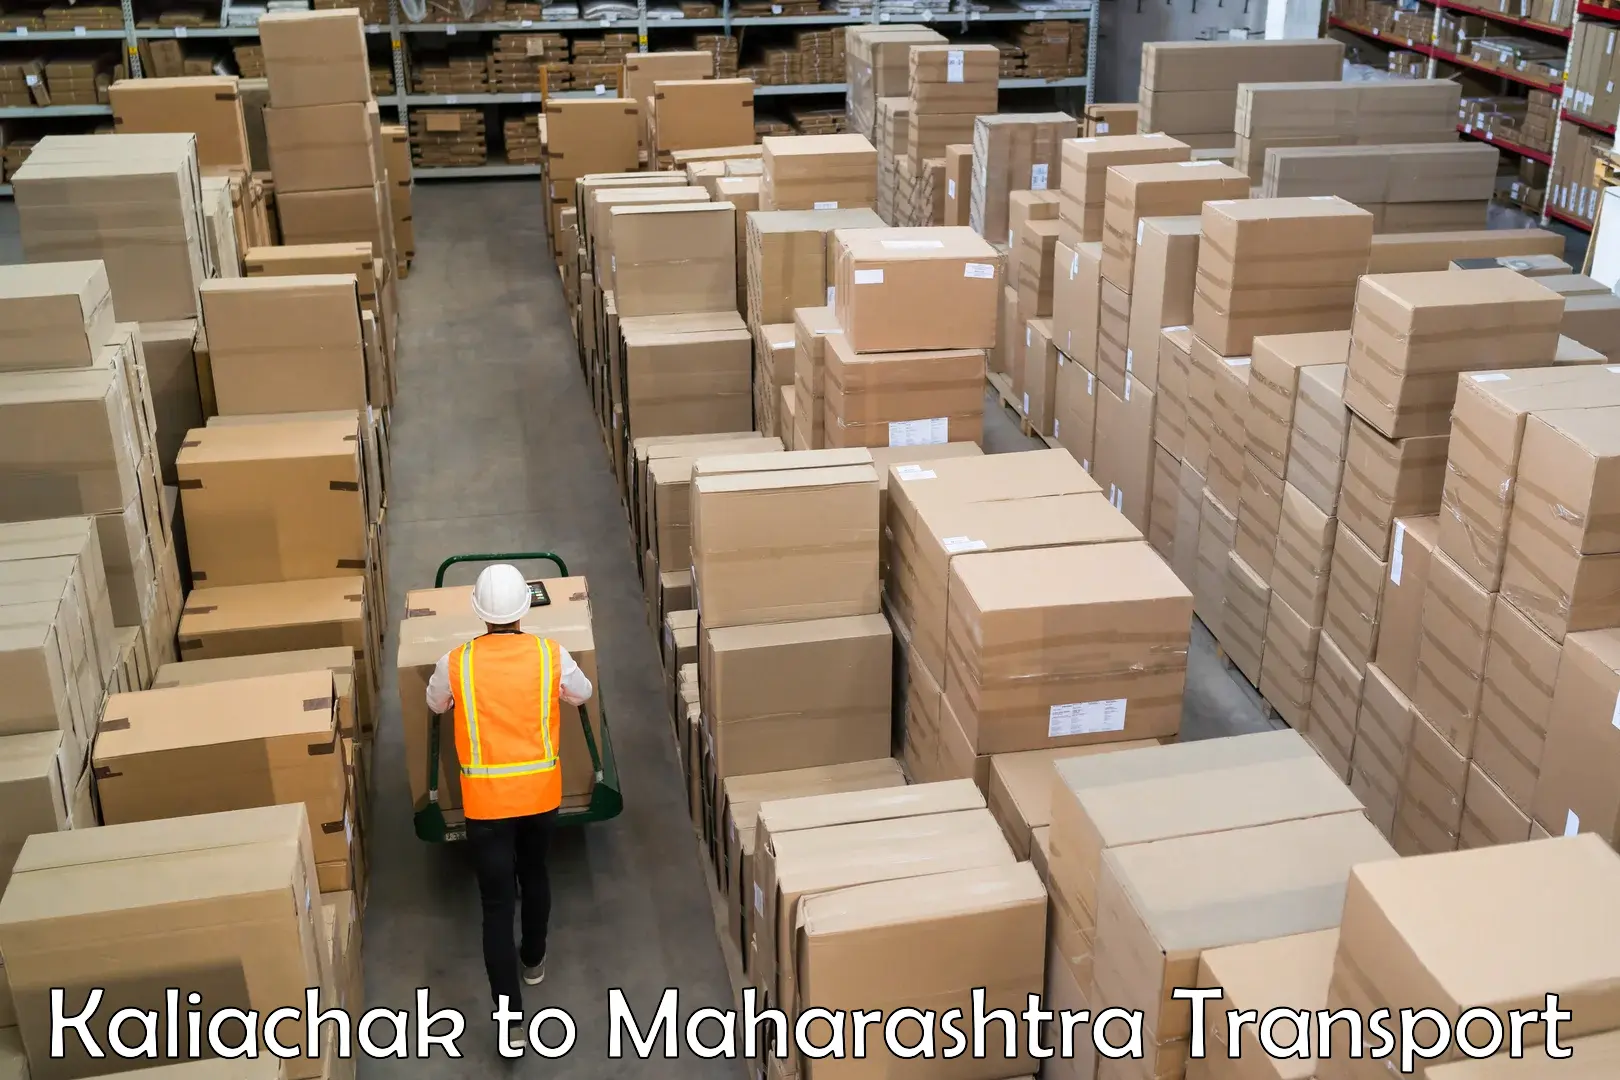 Truck transport companies in India Kaliachak to Nashik